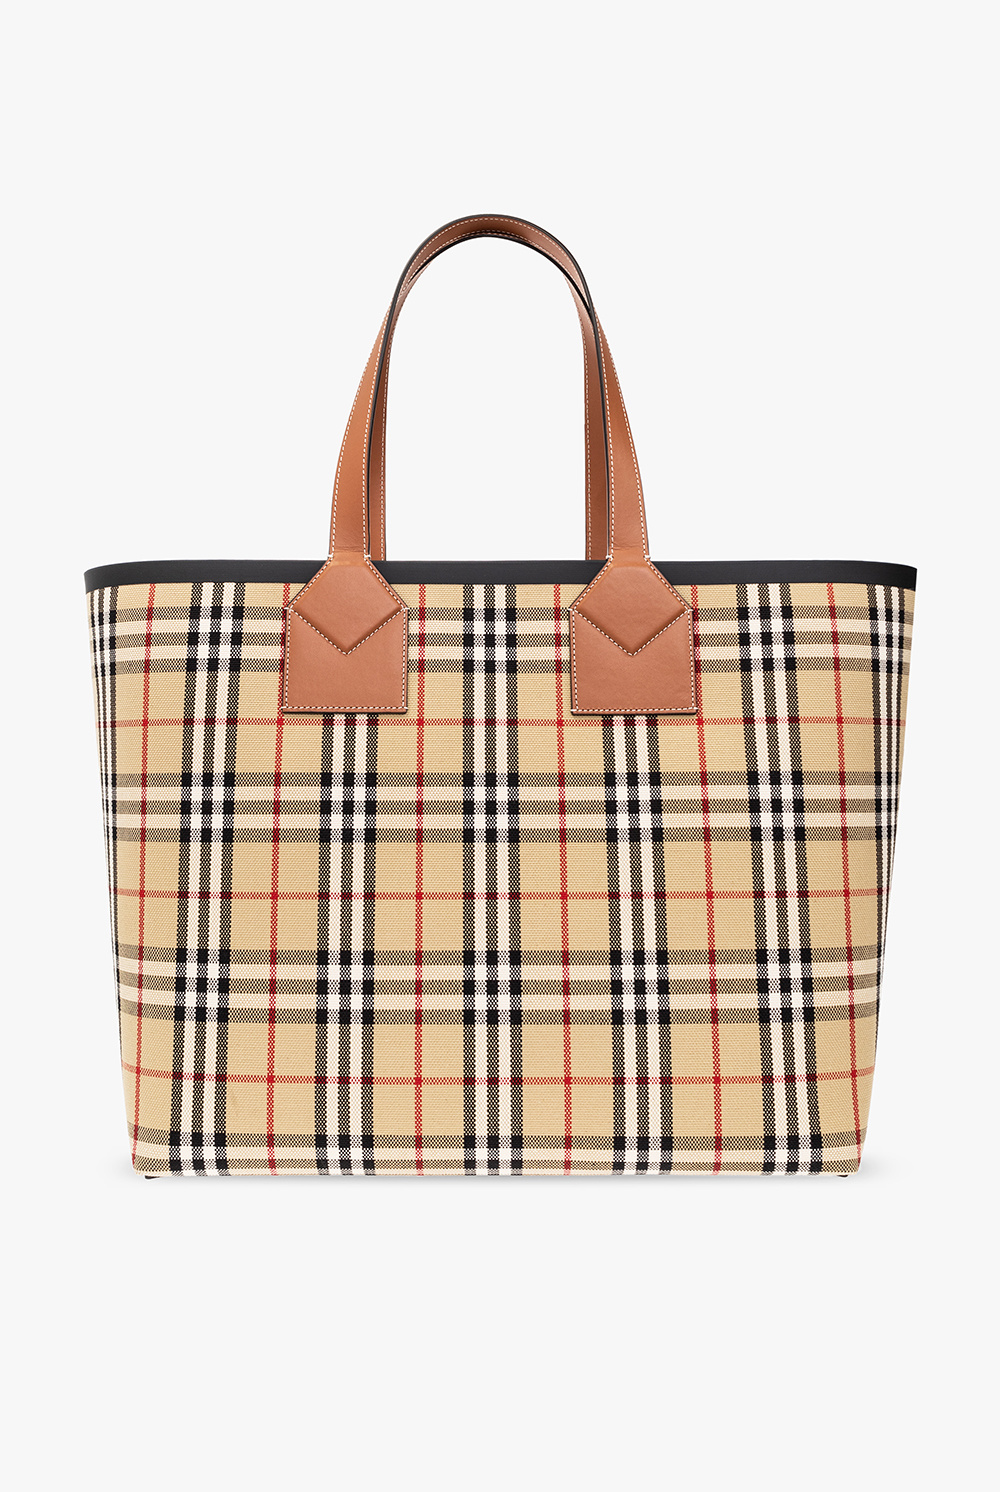 Burberry ‘London Large’ shopper bag